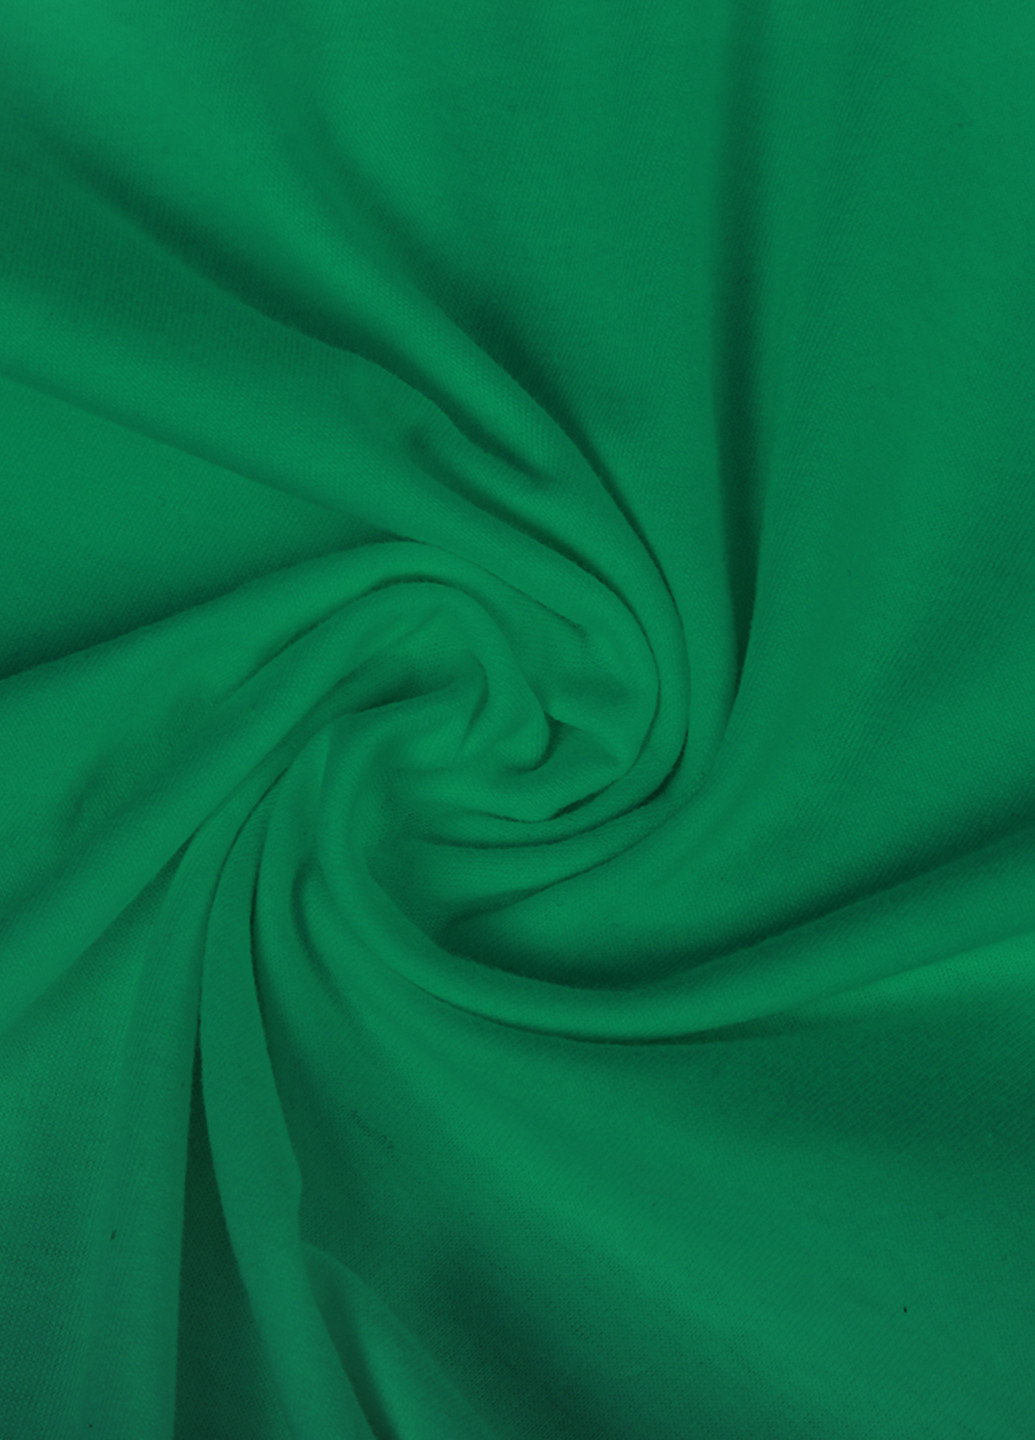 Зелена демісезонна футболка дитяча рік і морті (rick and morty) (9224-1240) MobiPrint